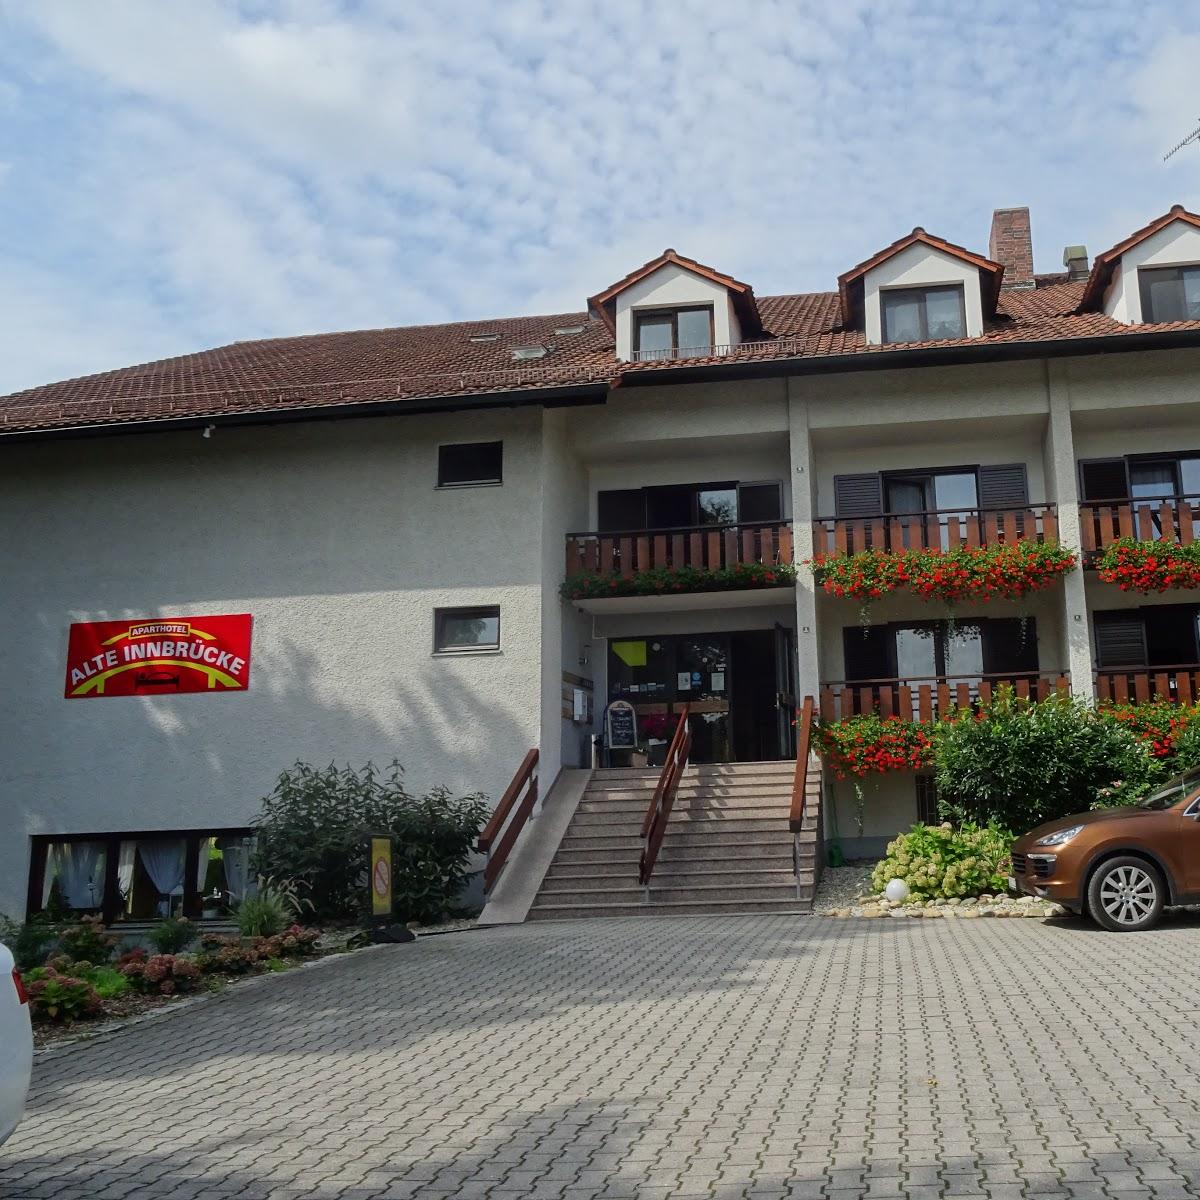 Restaurant "Hotel Alte Innbrücke" in Neuhaus am Inn